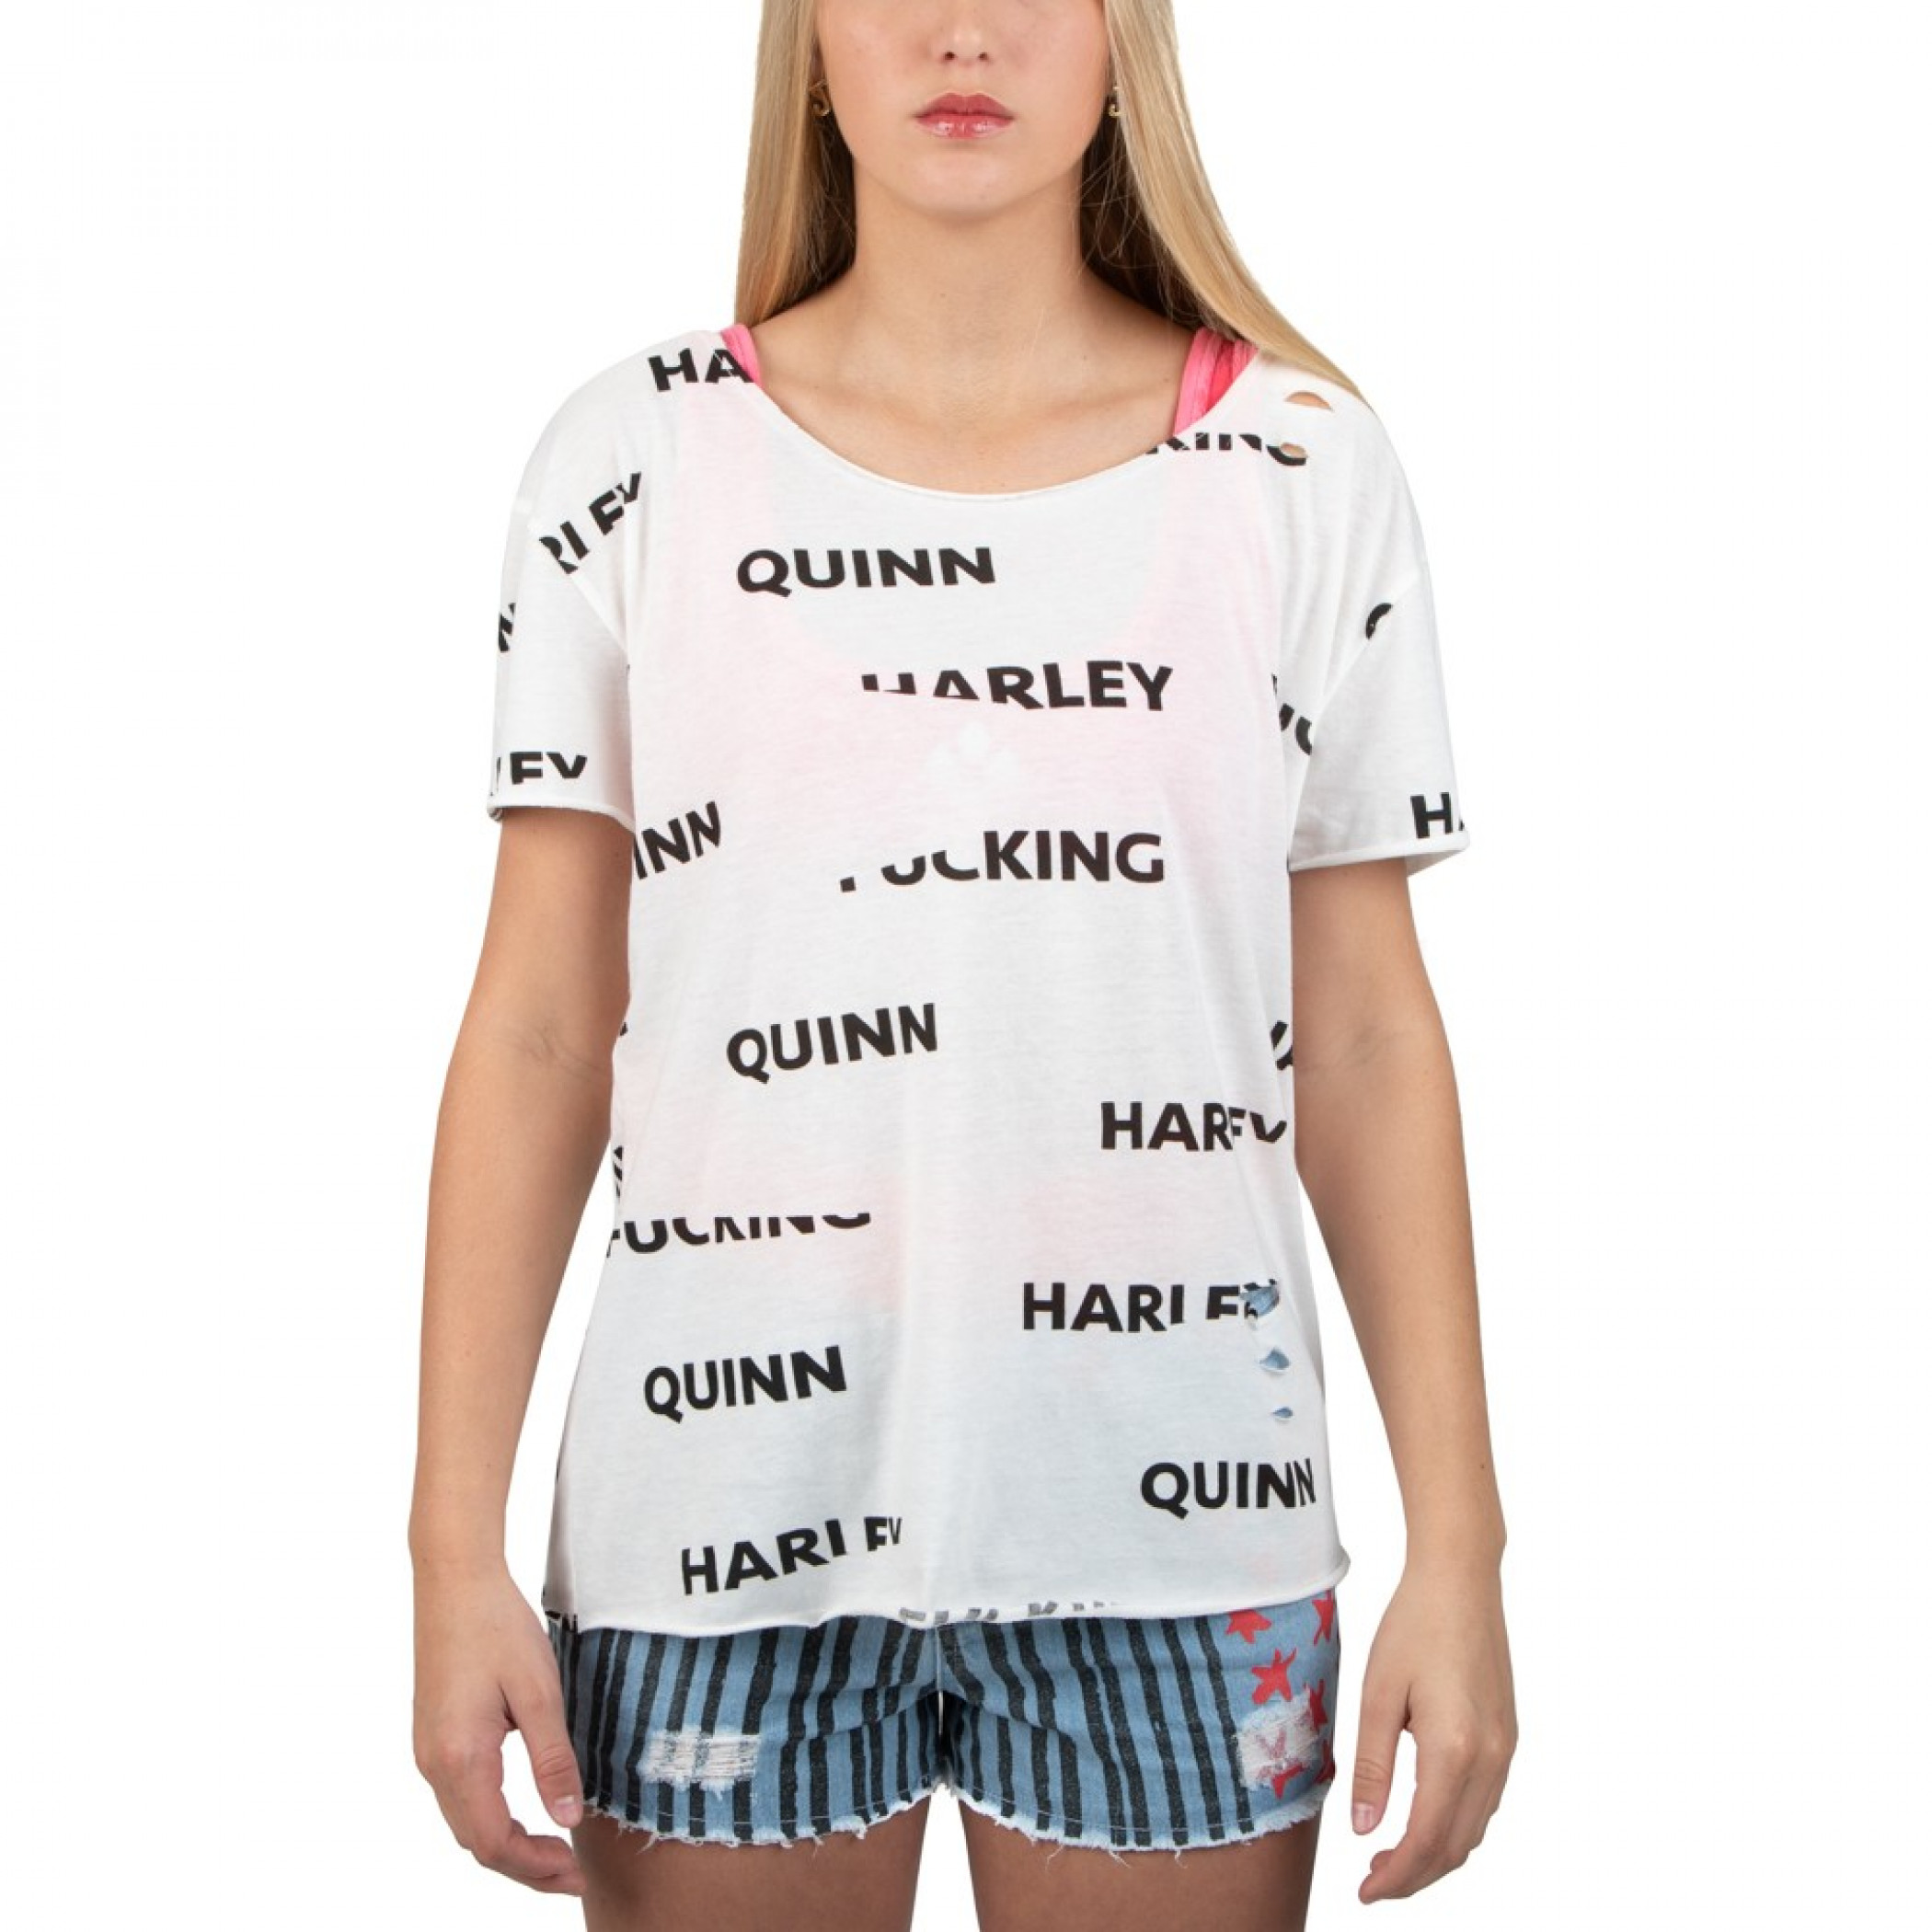 Harley Quinn Birds of Prey Cosplay Distressed Women's T-Shirt